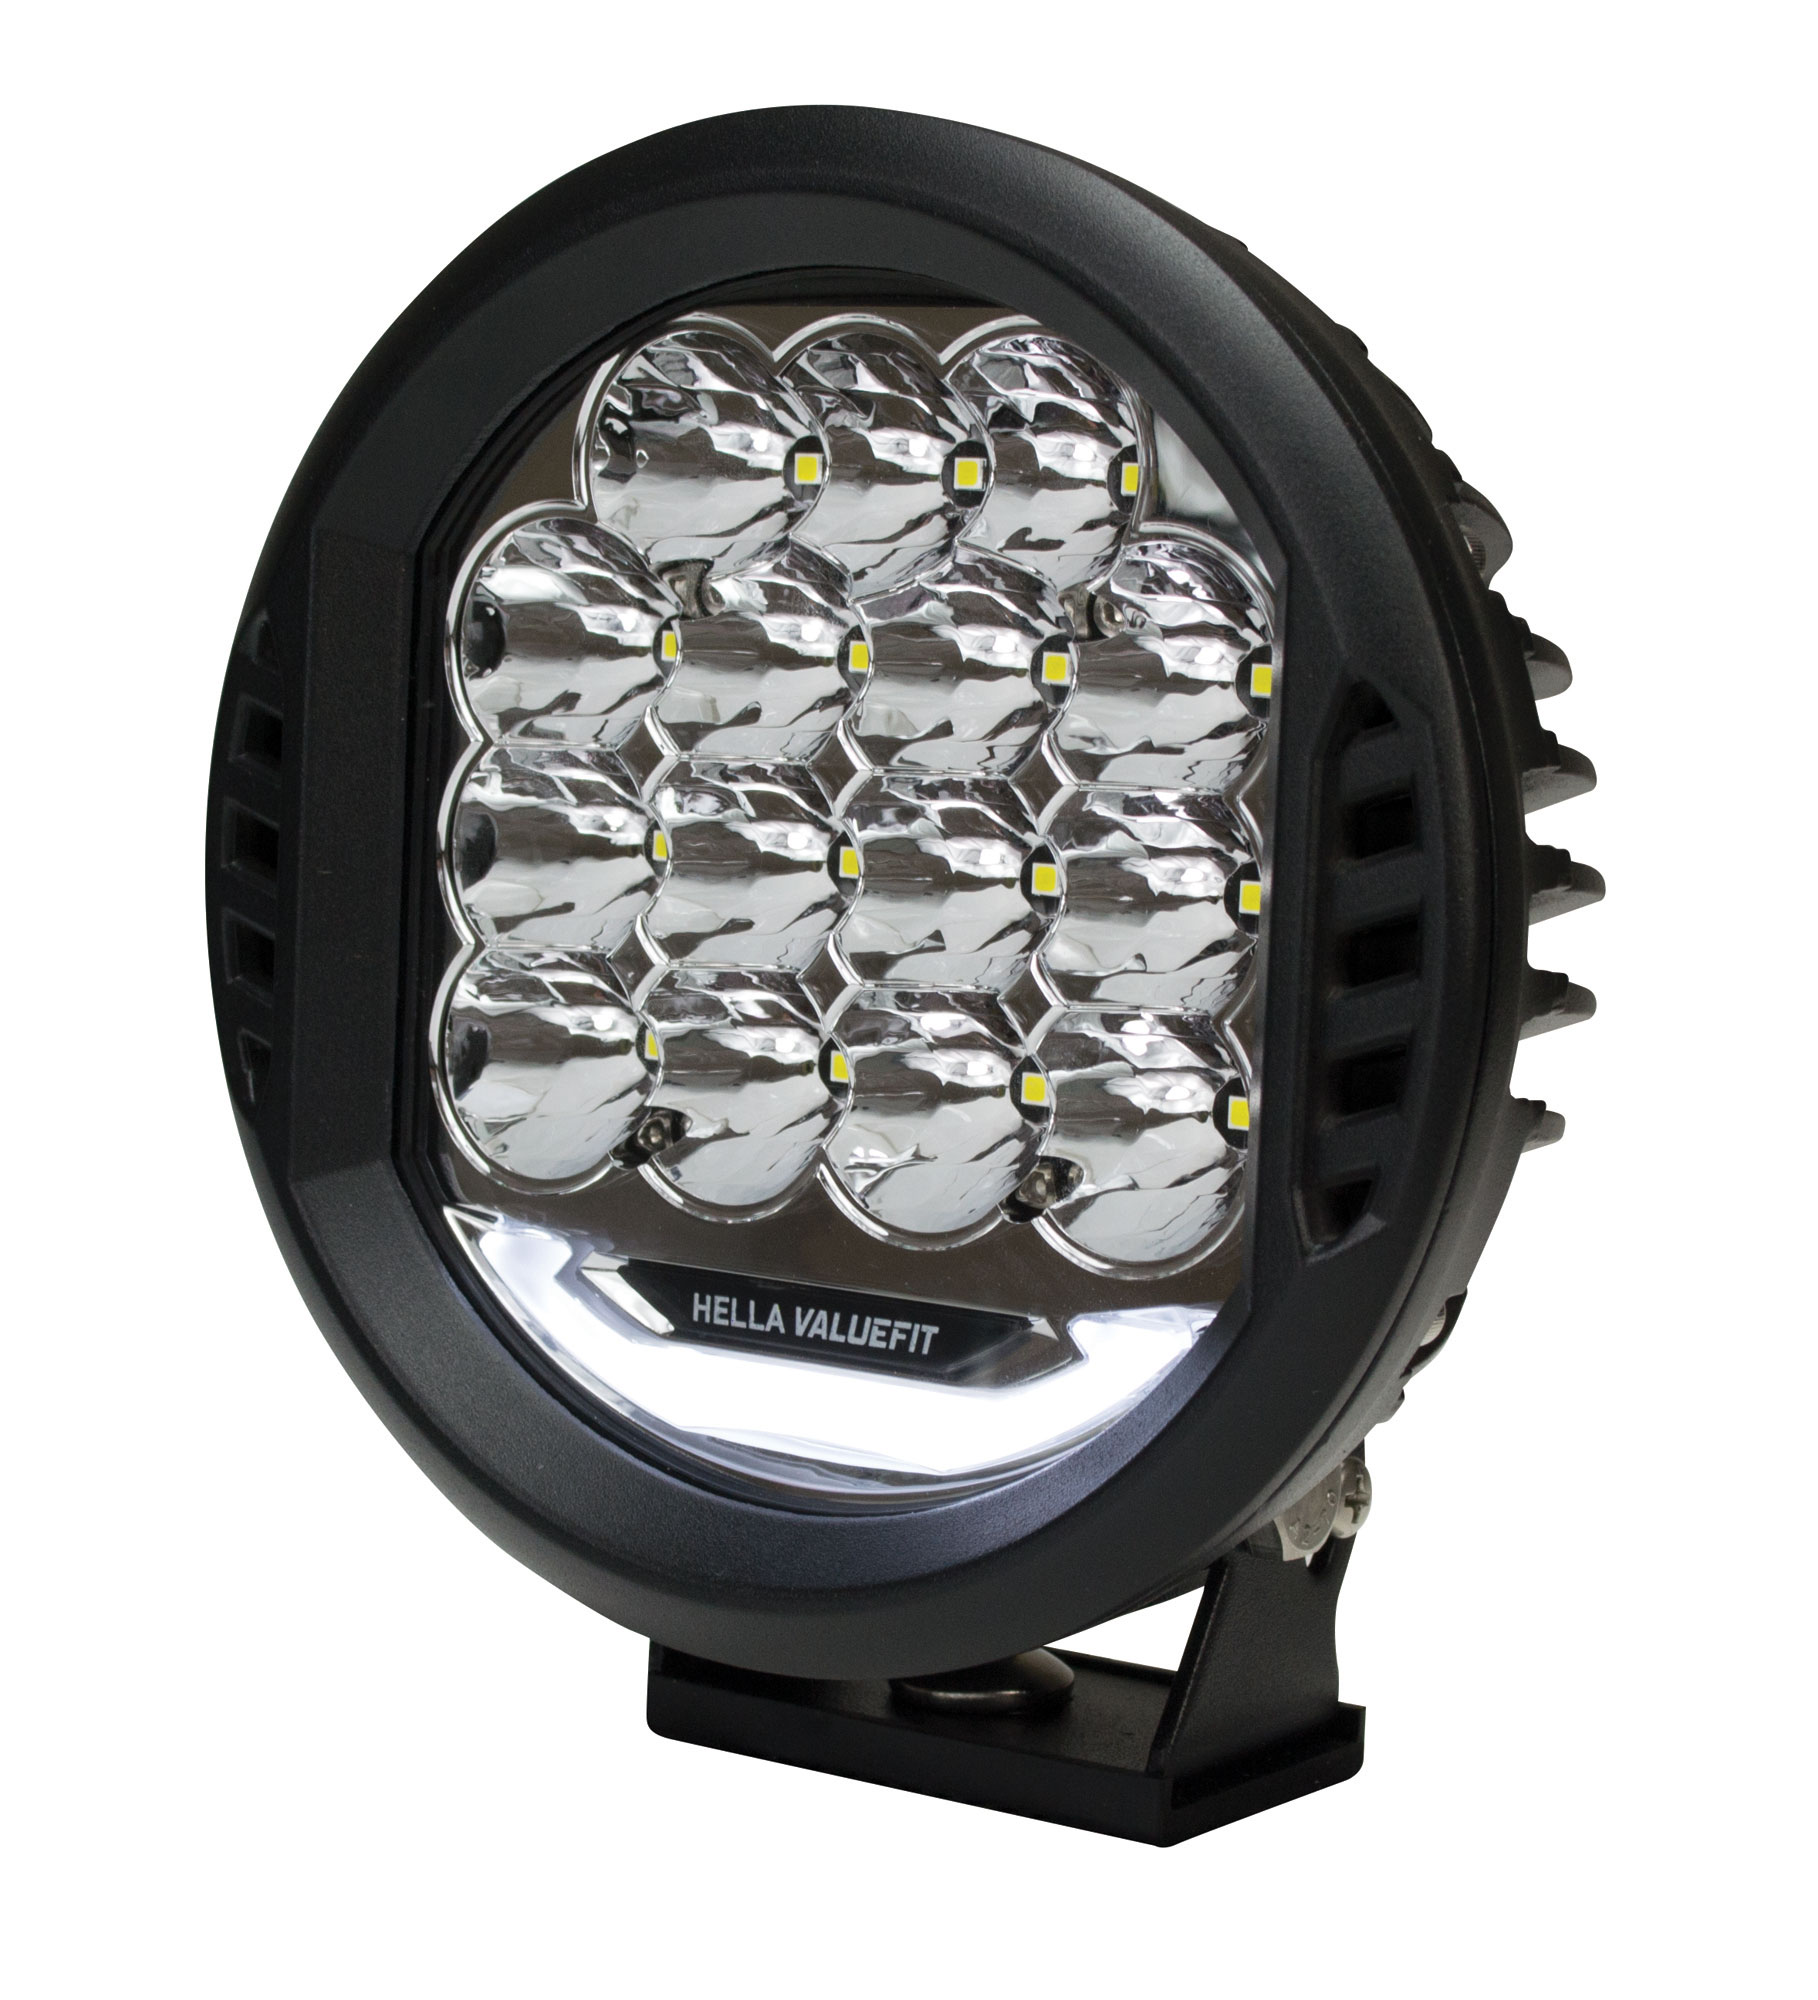 Hella ValueFit 500 LED - Driving Light, Kit